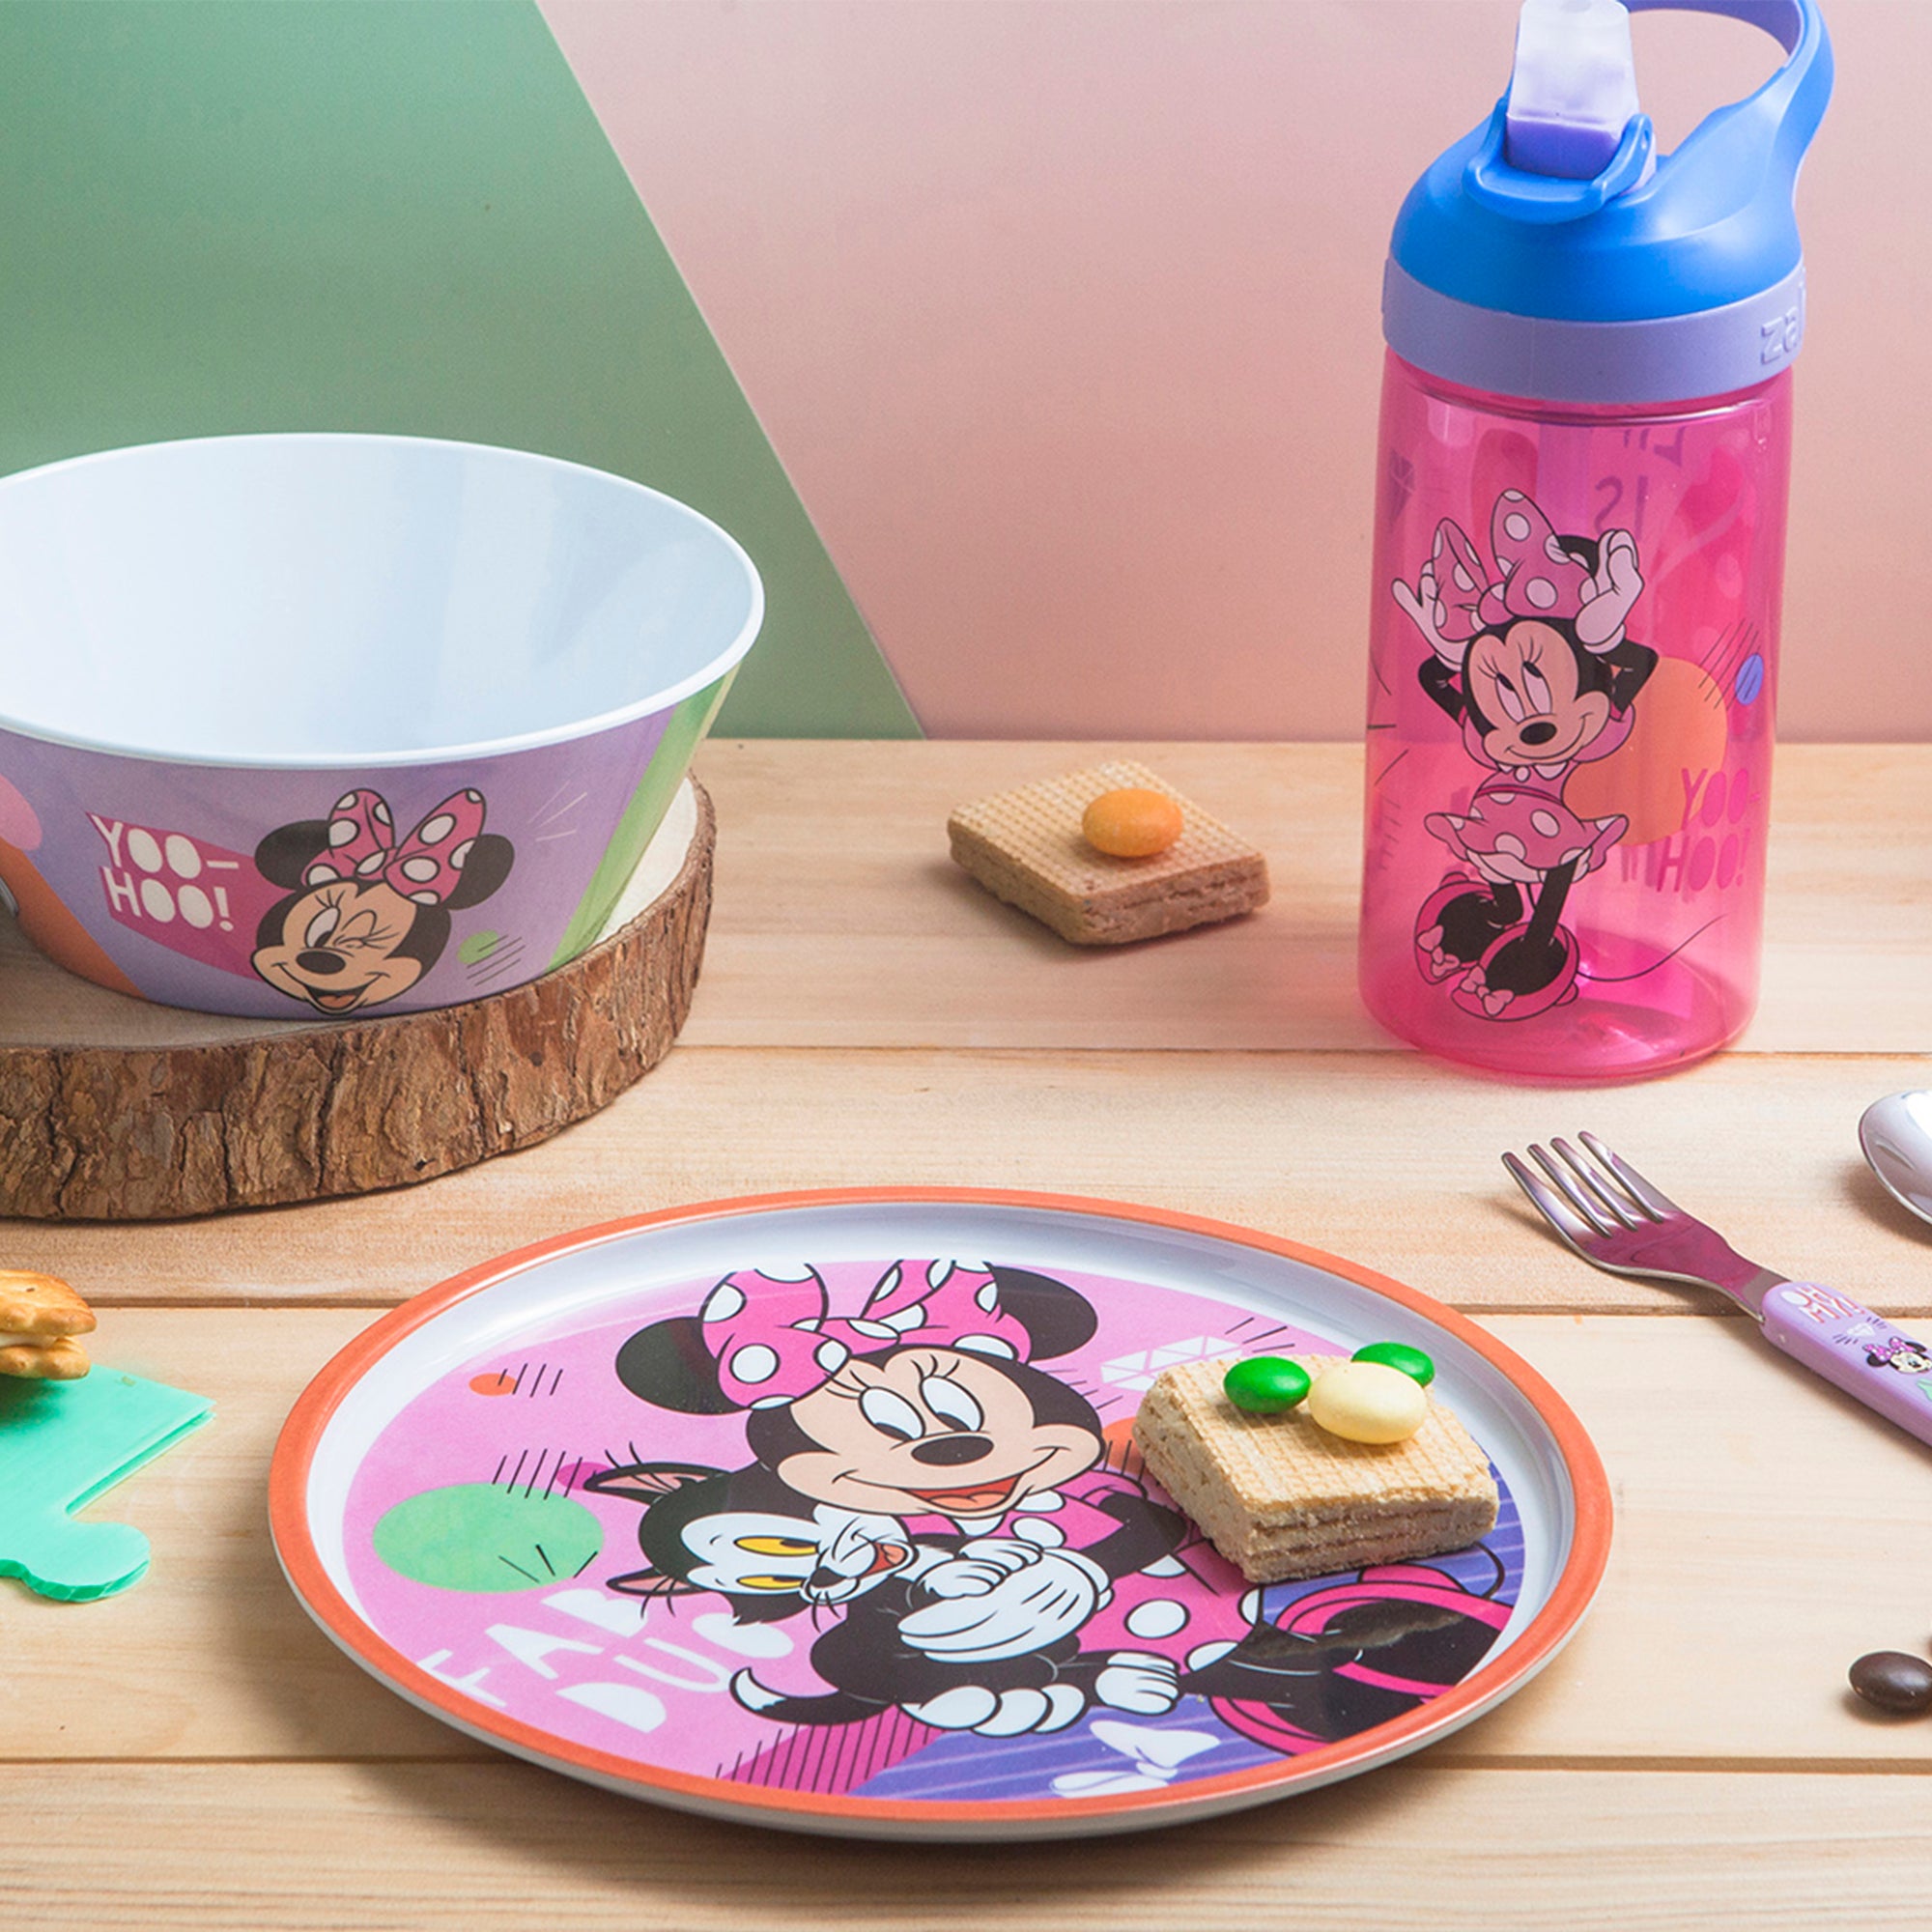 Disney Minnie Mouse Melamine Kids Dinnerware Set with Water Bottle